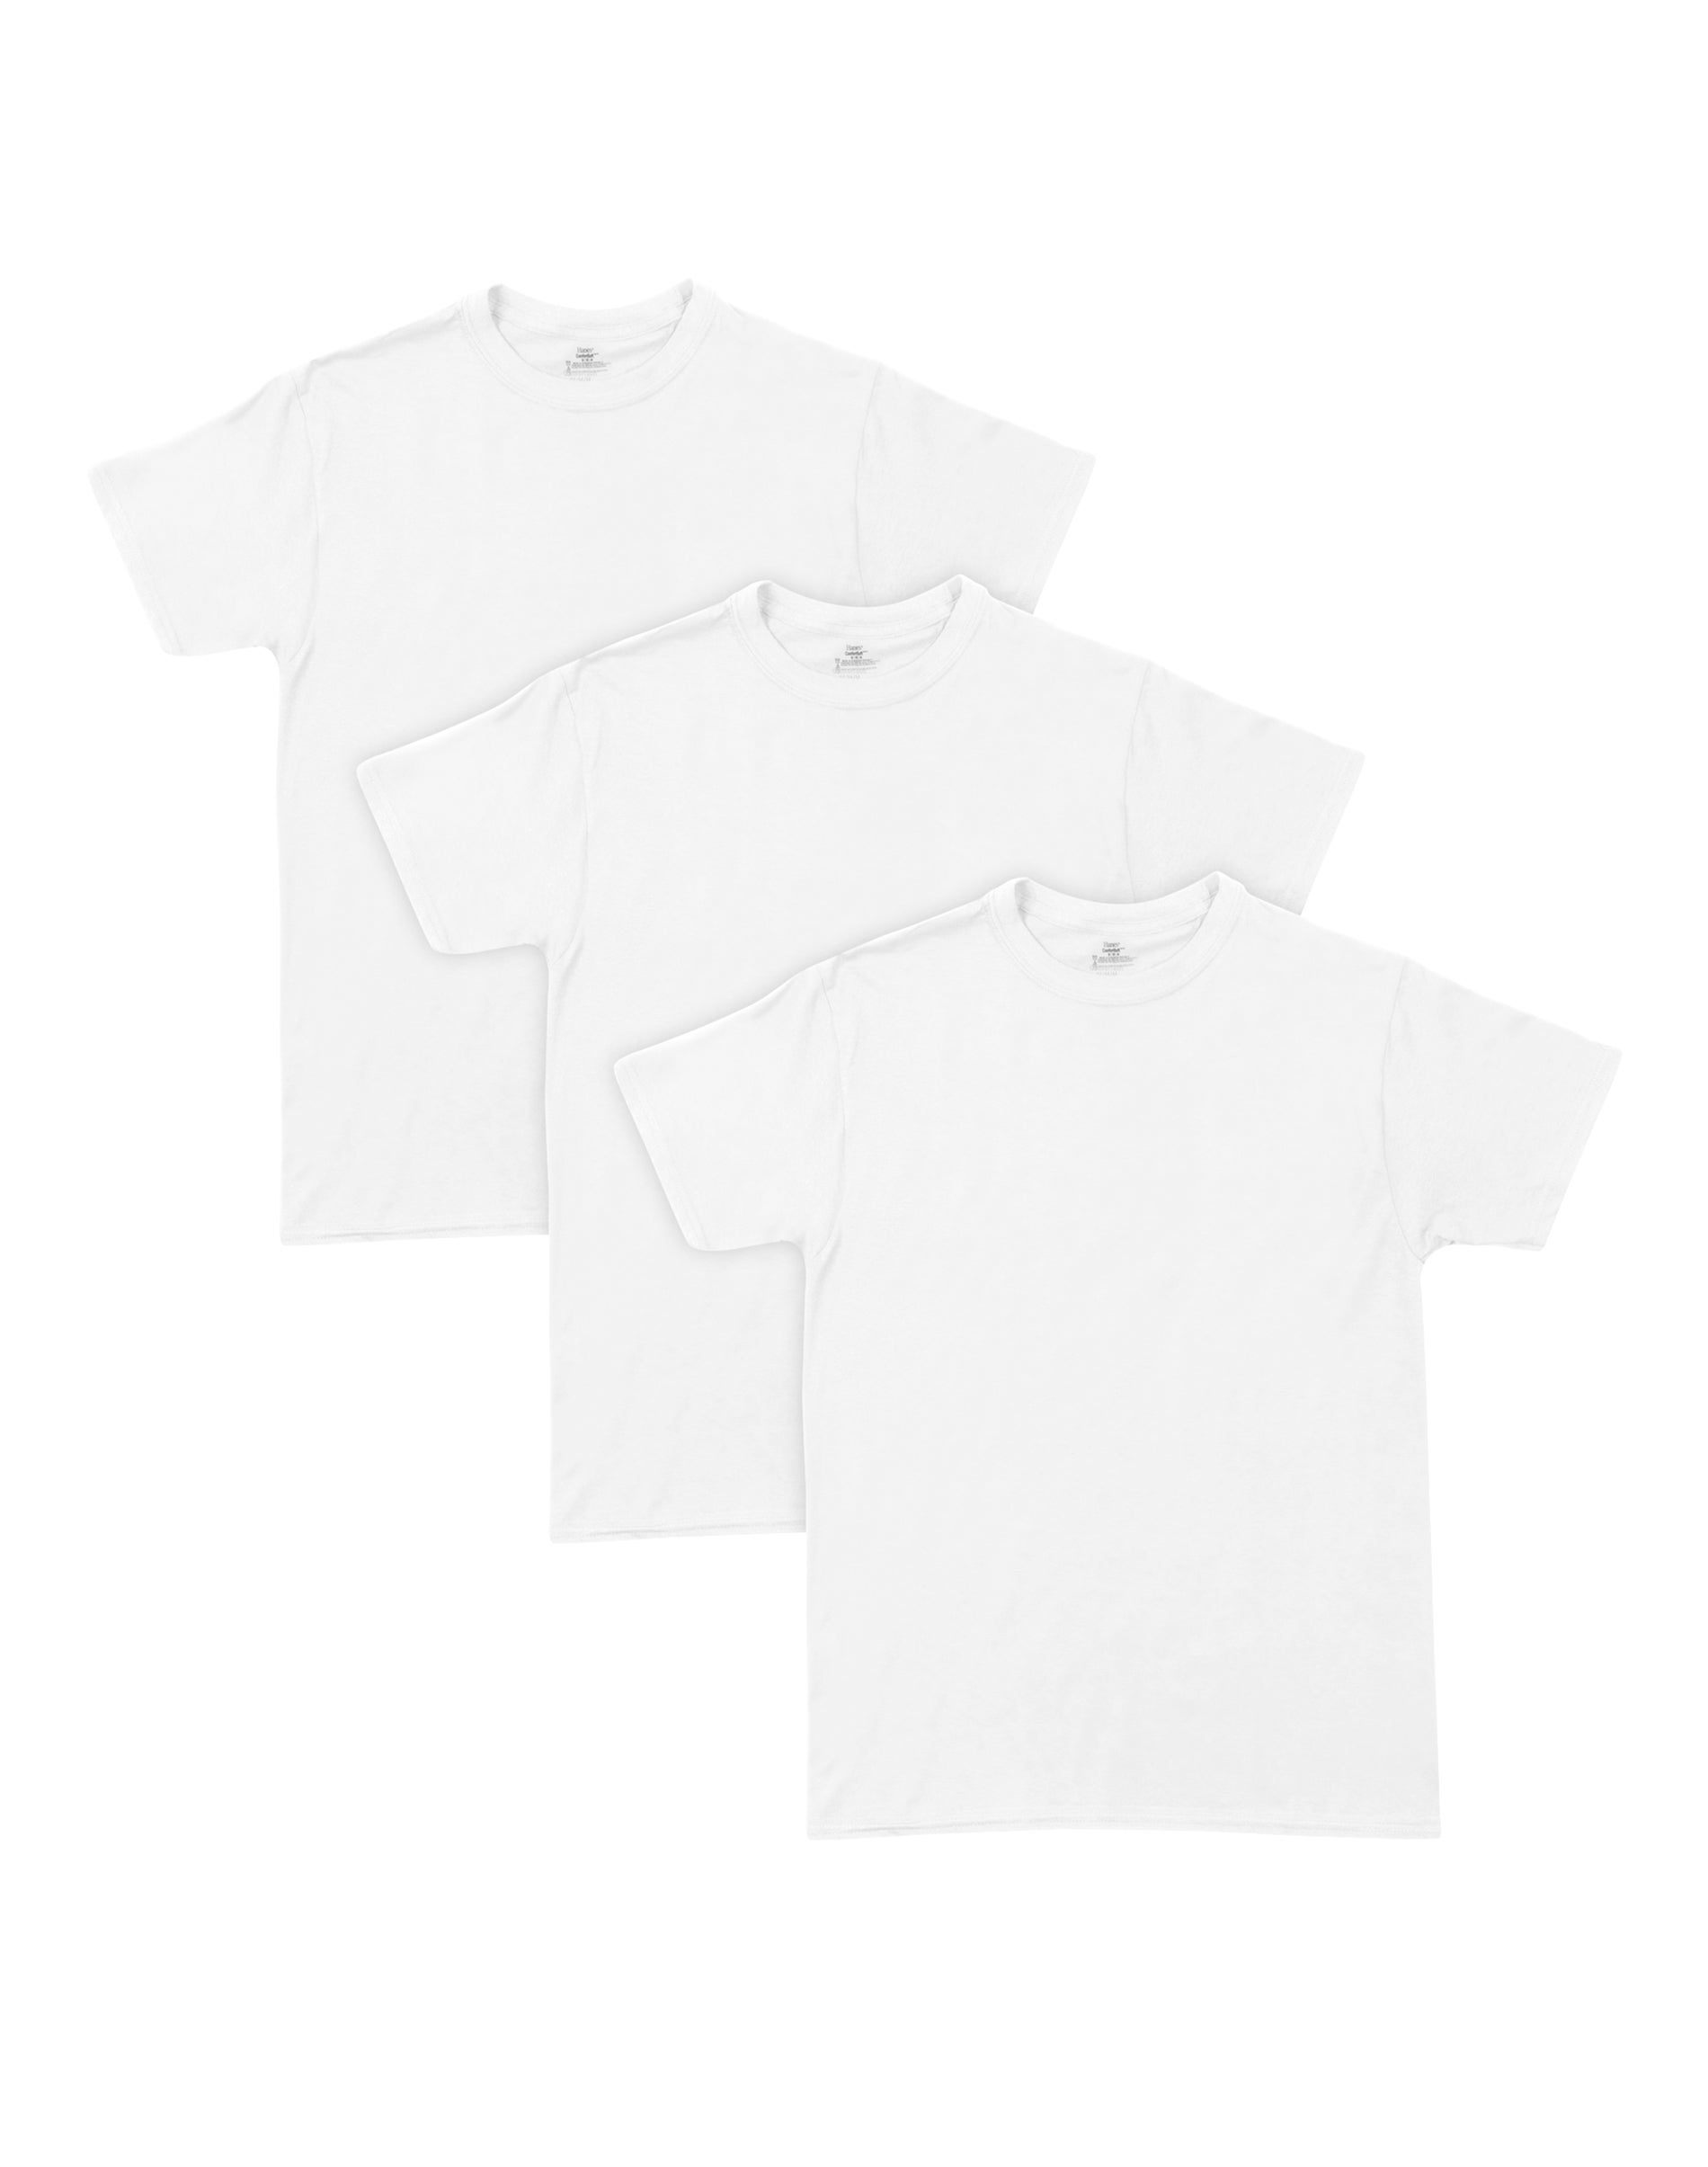 Hanes Mens Comfort Fit White Crew Undershirt 3-Pack